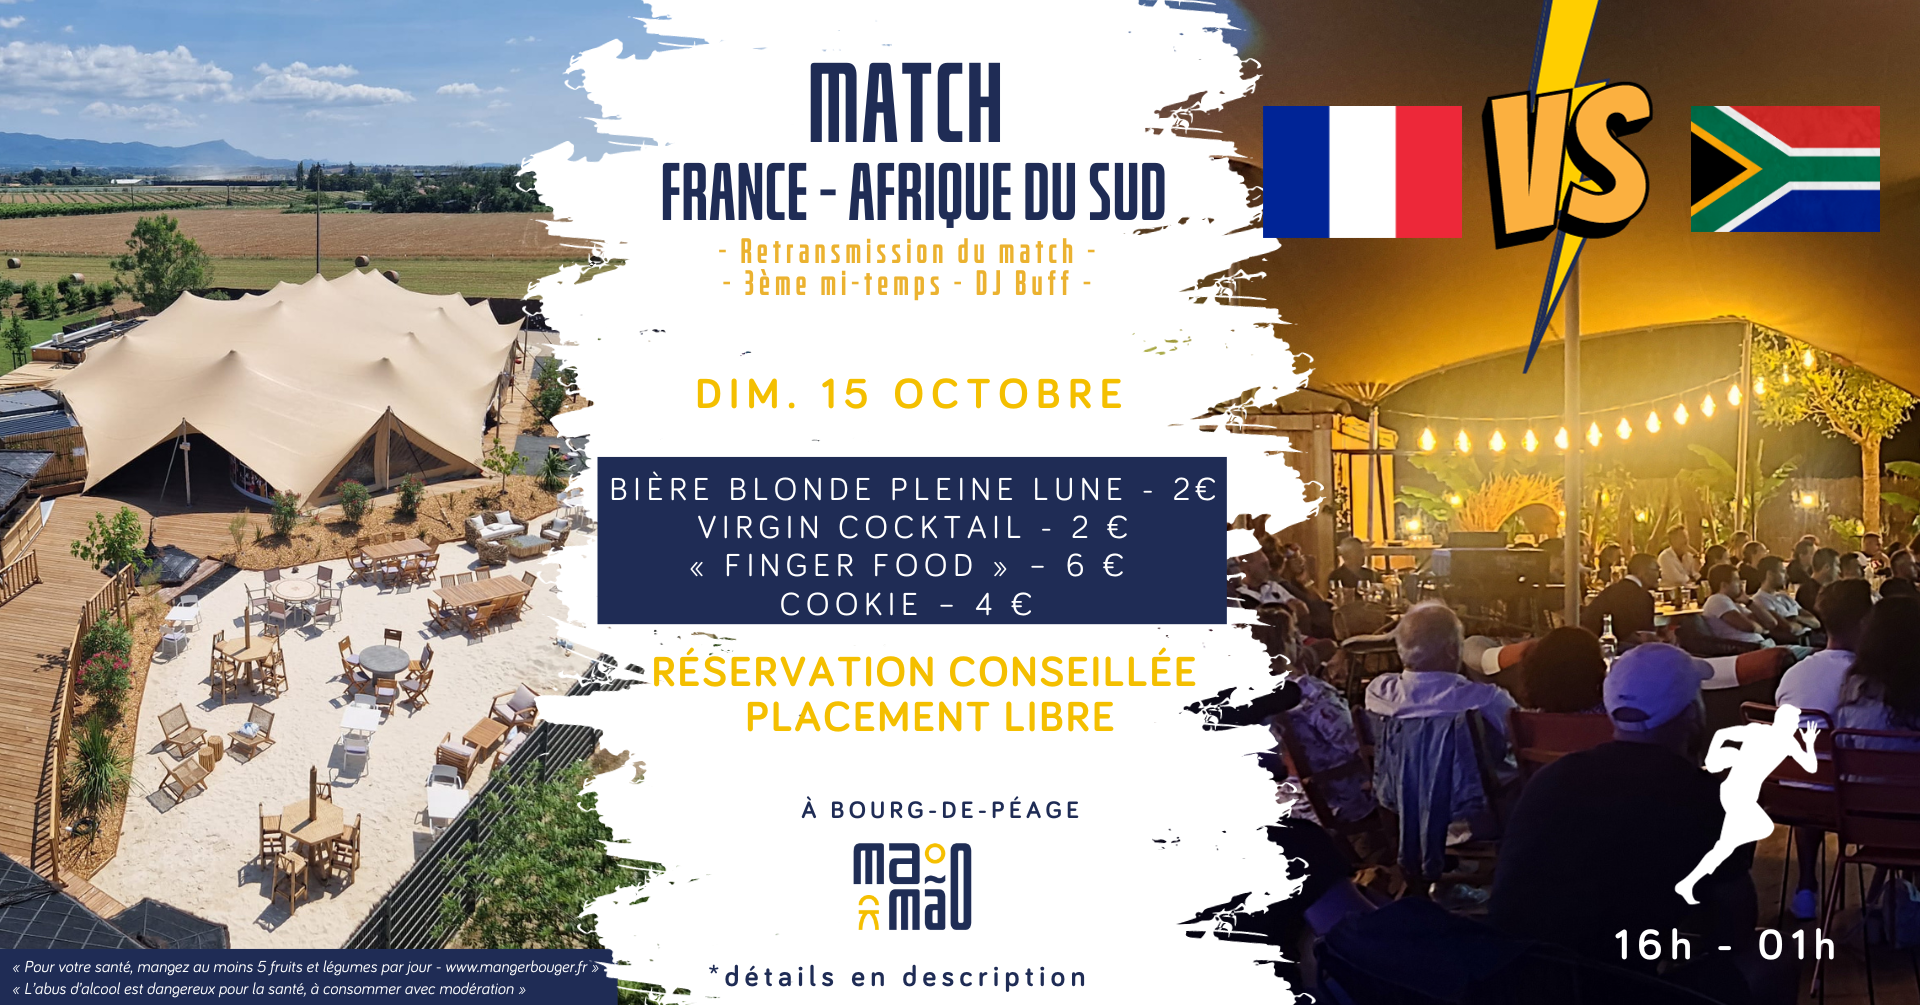 15 Octobre - Diffusion Match Rugby France - Afrique du Sud + DJ BUFF